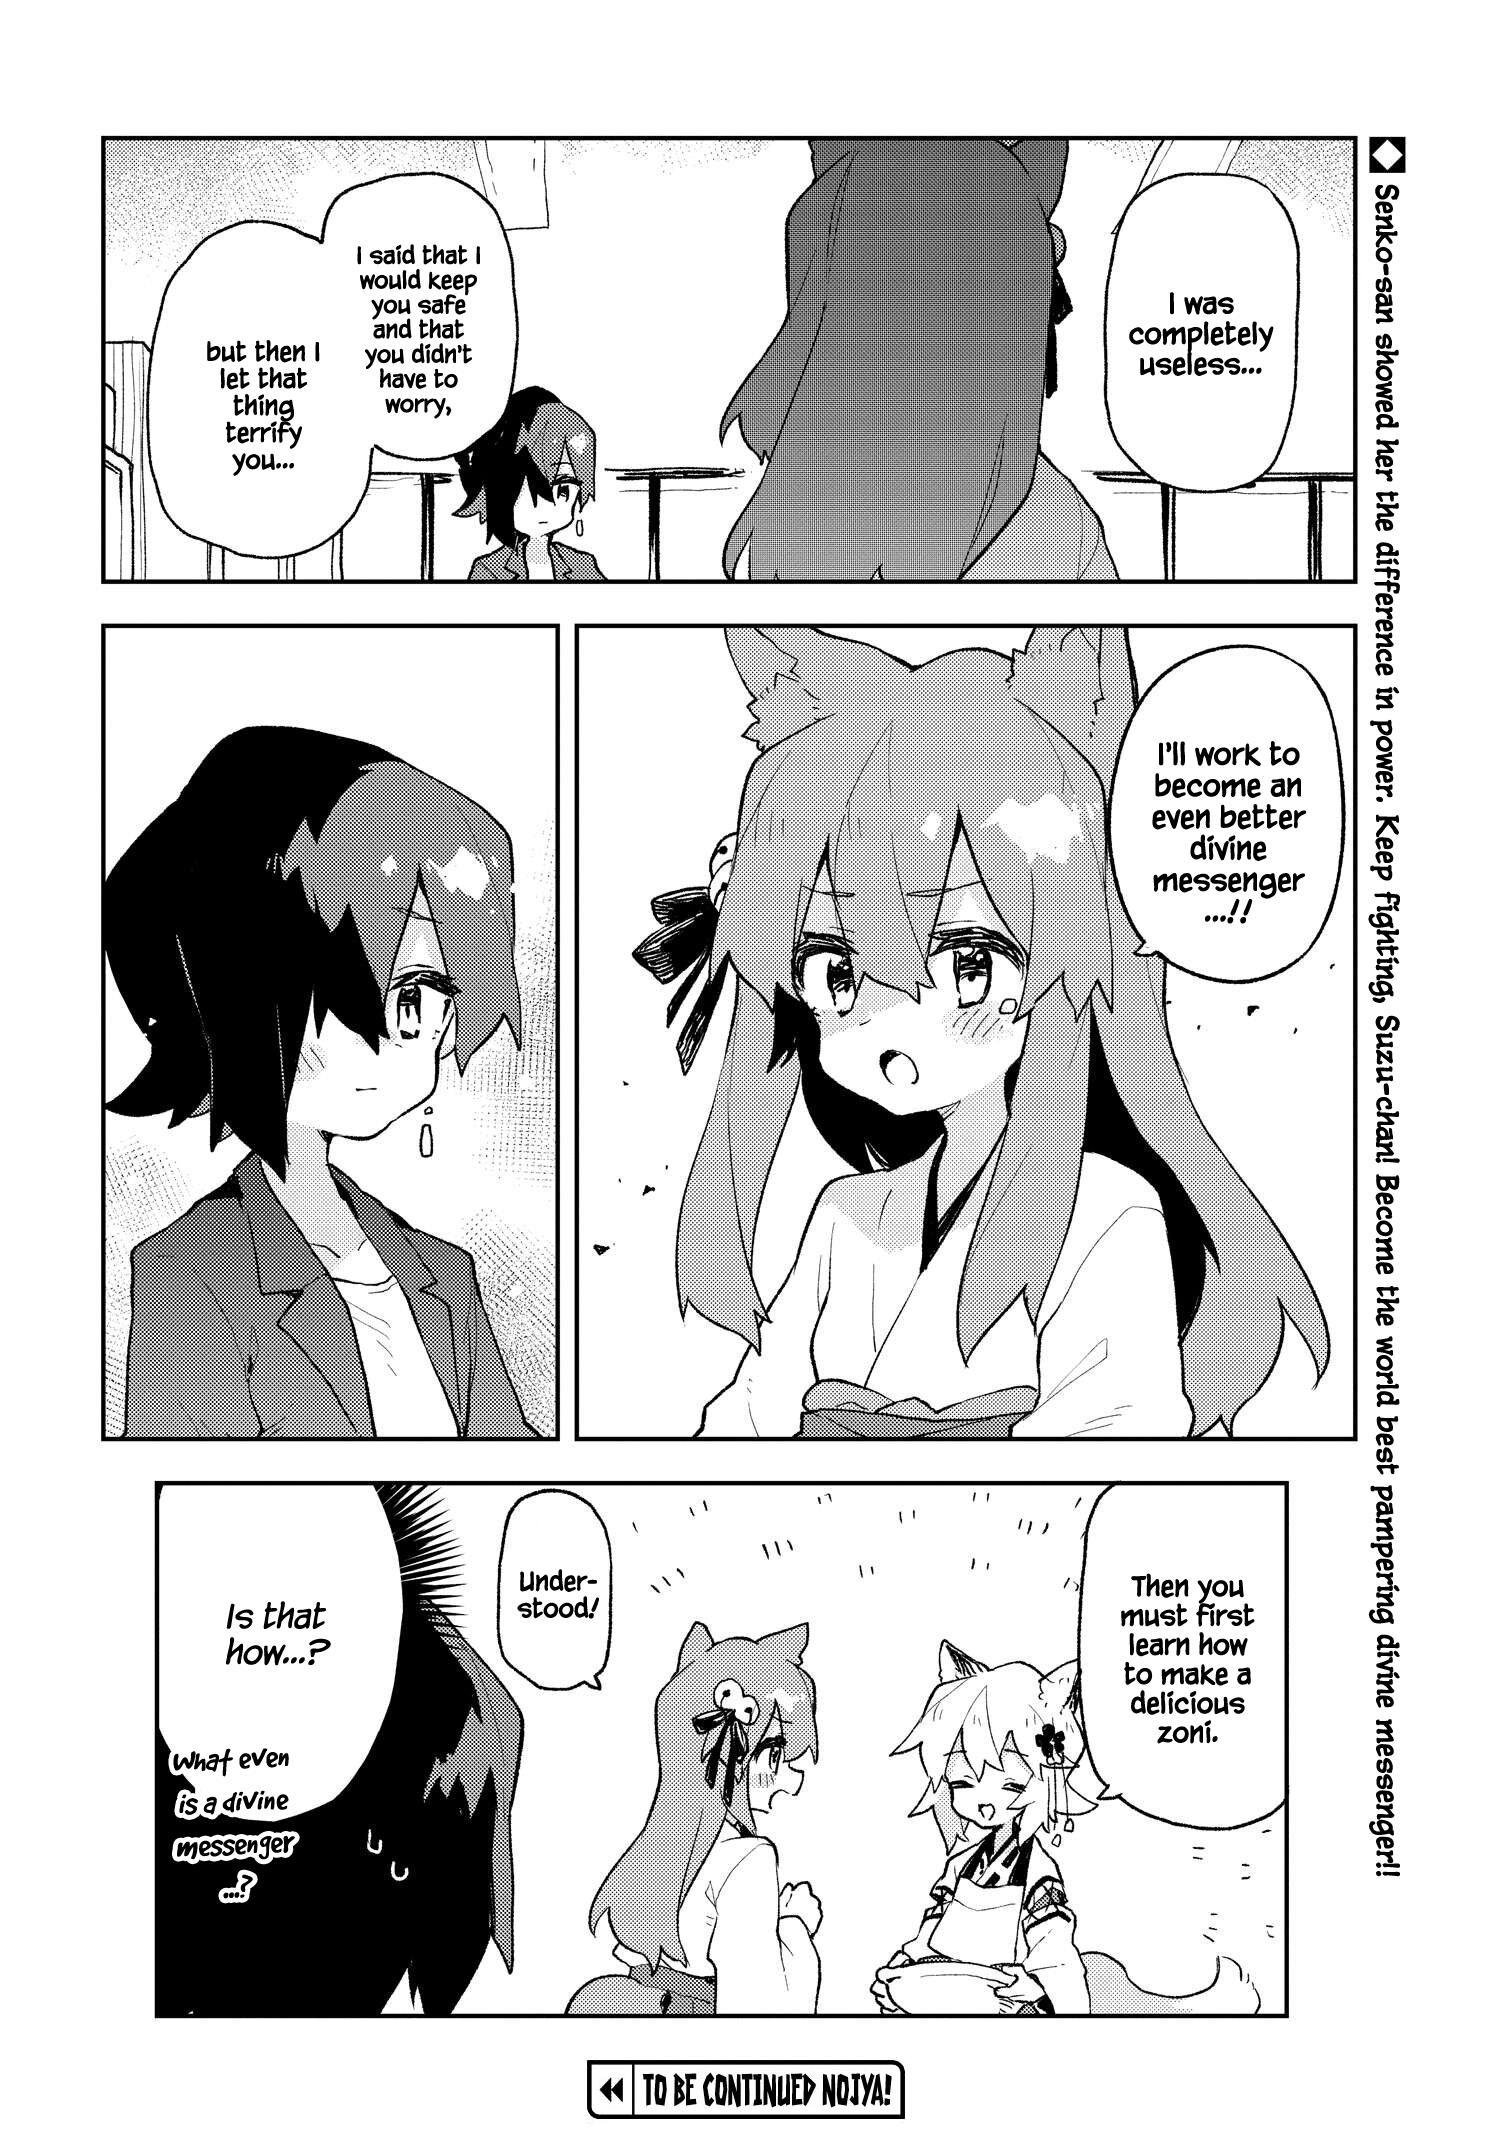 Sewayaki Kitsune No Senko-San Vol.11 Chapter 81 page 18 - Mangakakalot